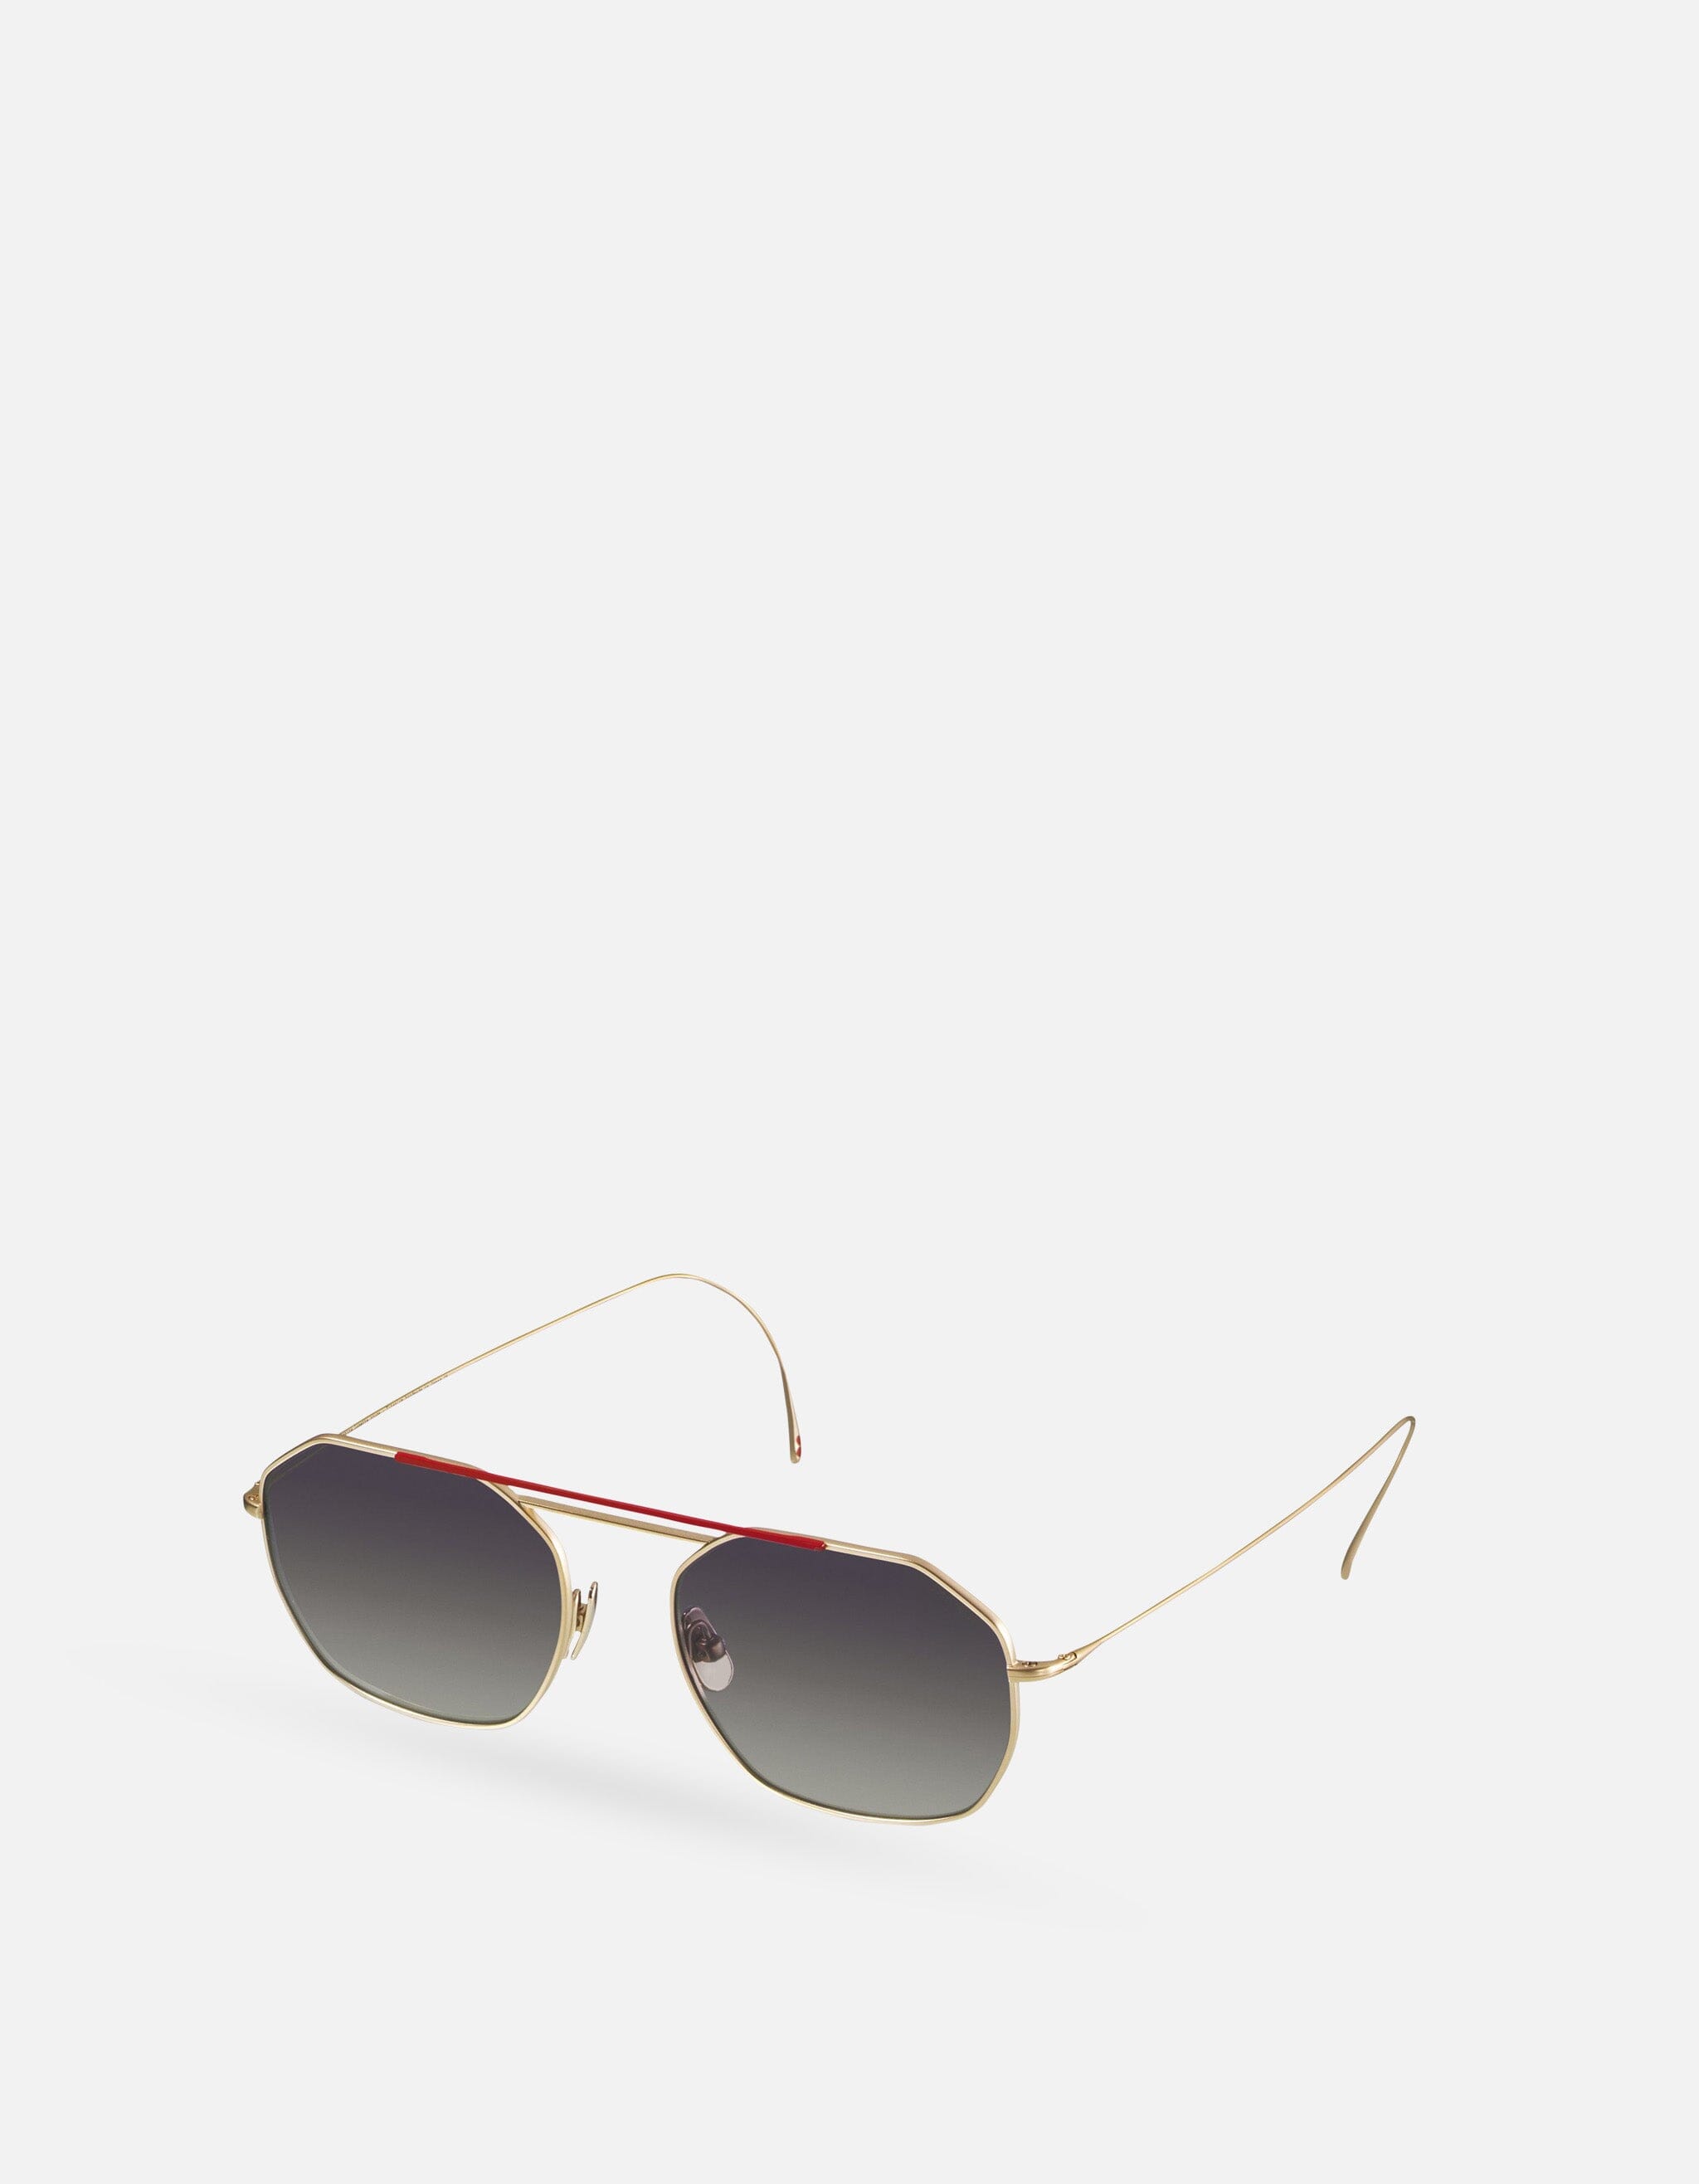 Hygre - Champagne Smoked Sunglasses - La petite lunette rouge MACKEENE 